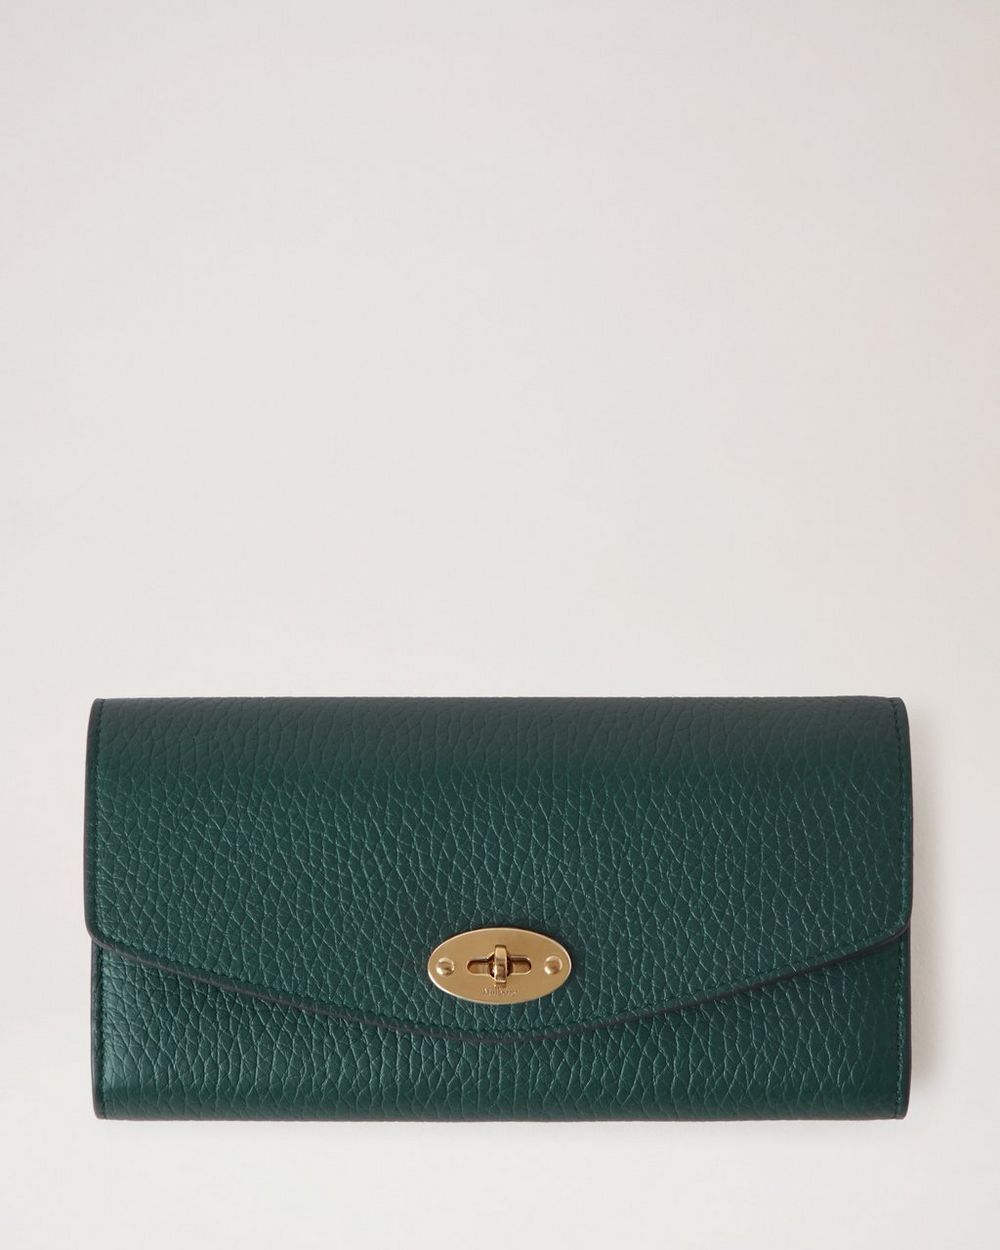 Blue/Green Handbags, Purses & Wallets for Women